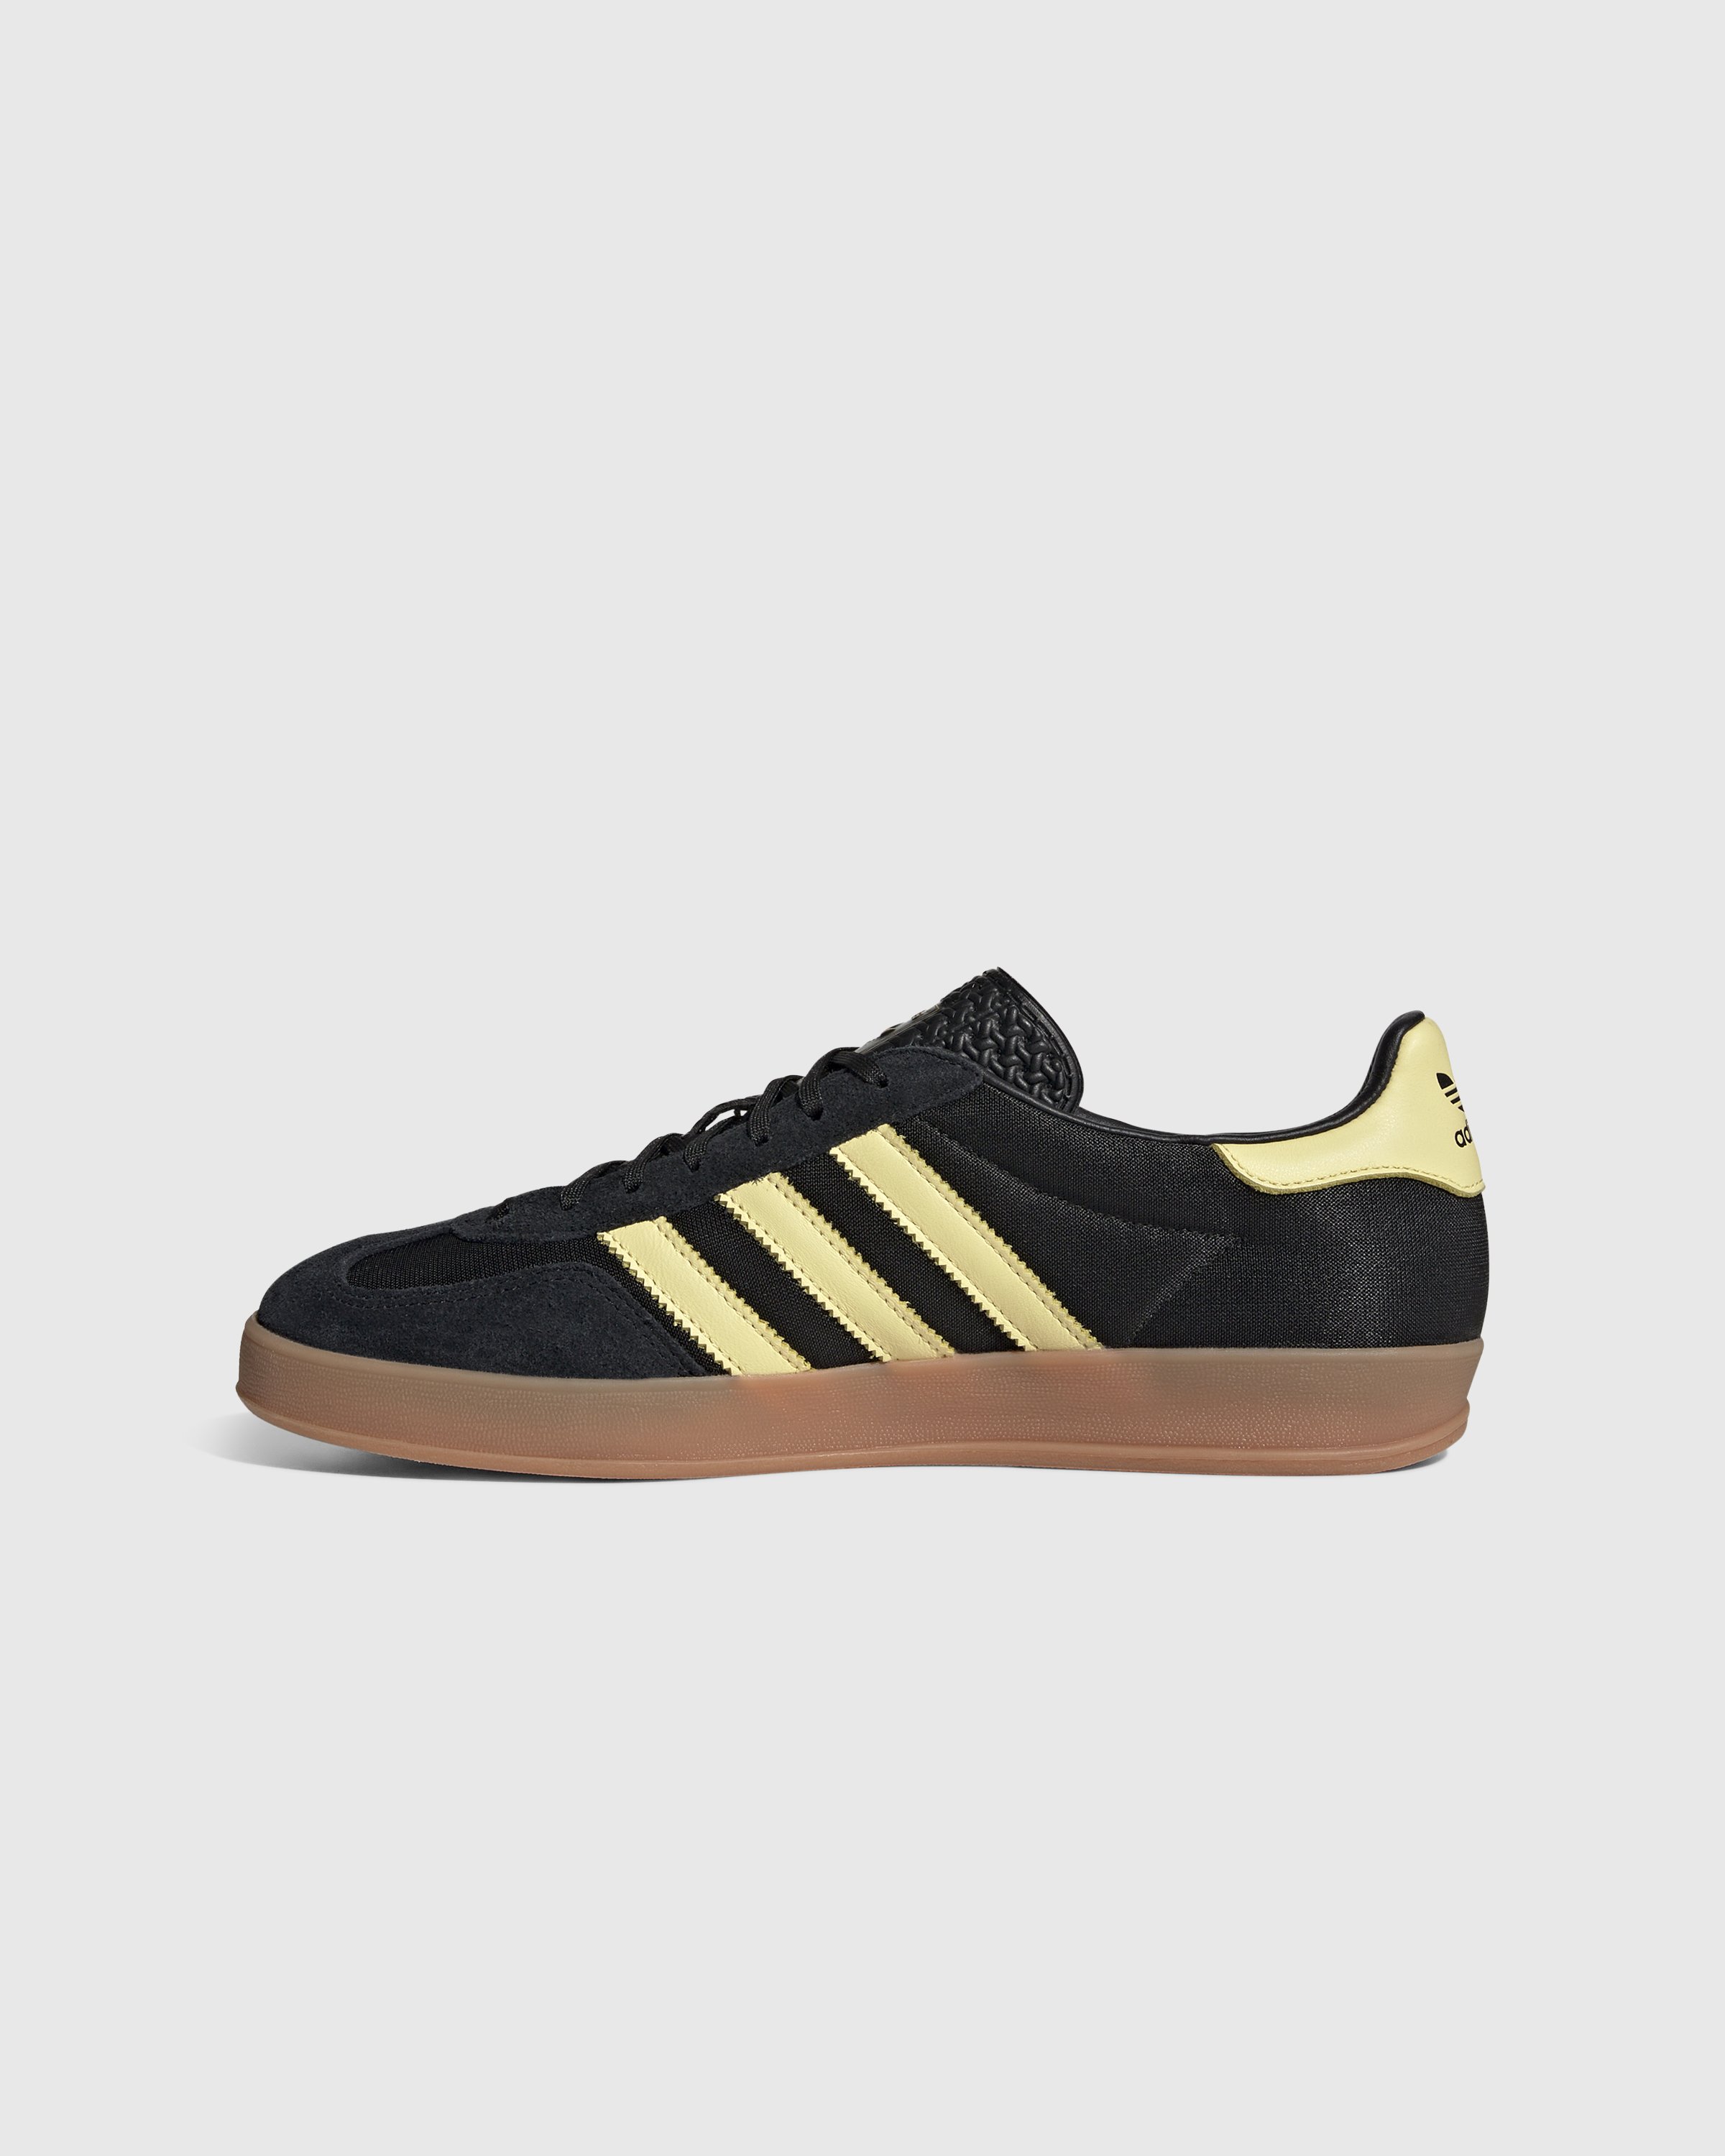 Adidas - Gazelle Core Black/Gum - Footwear - Black - Image 2